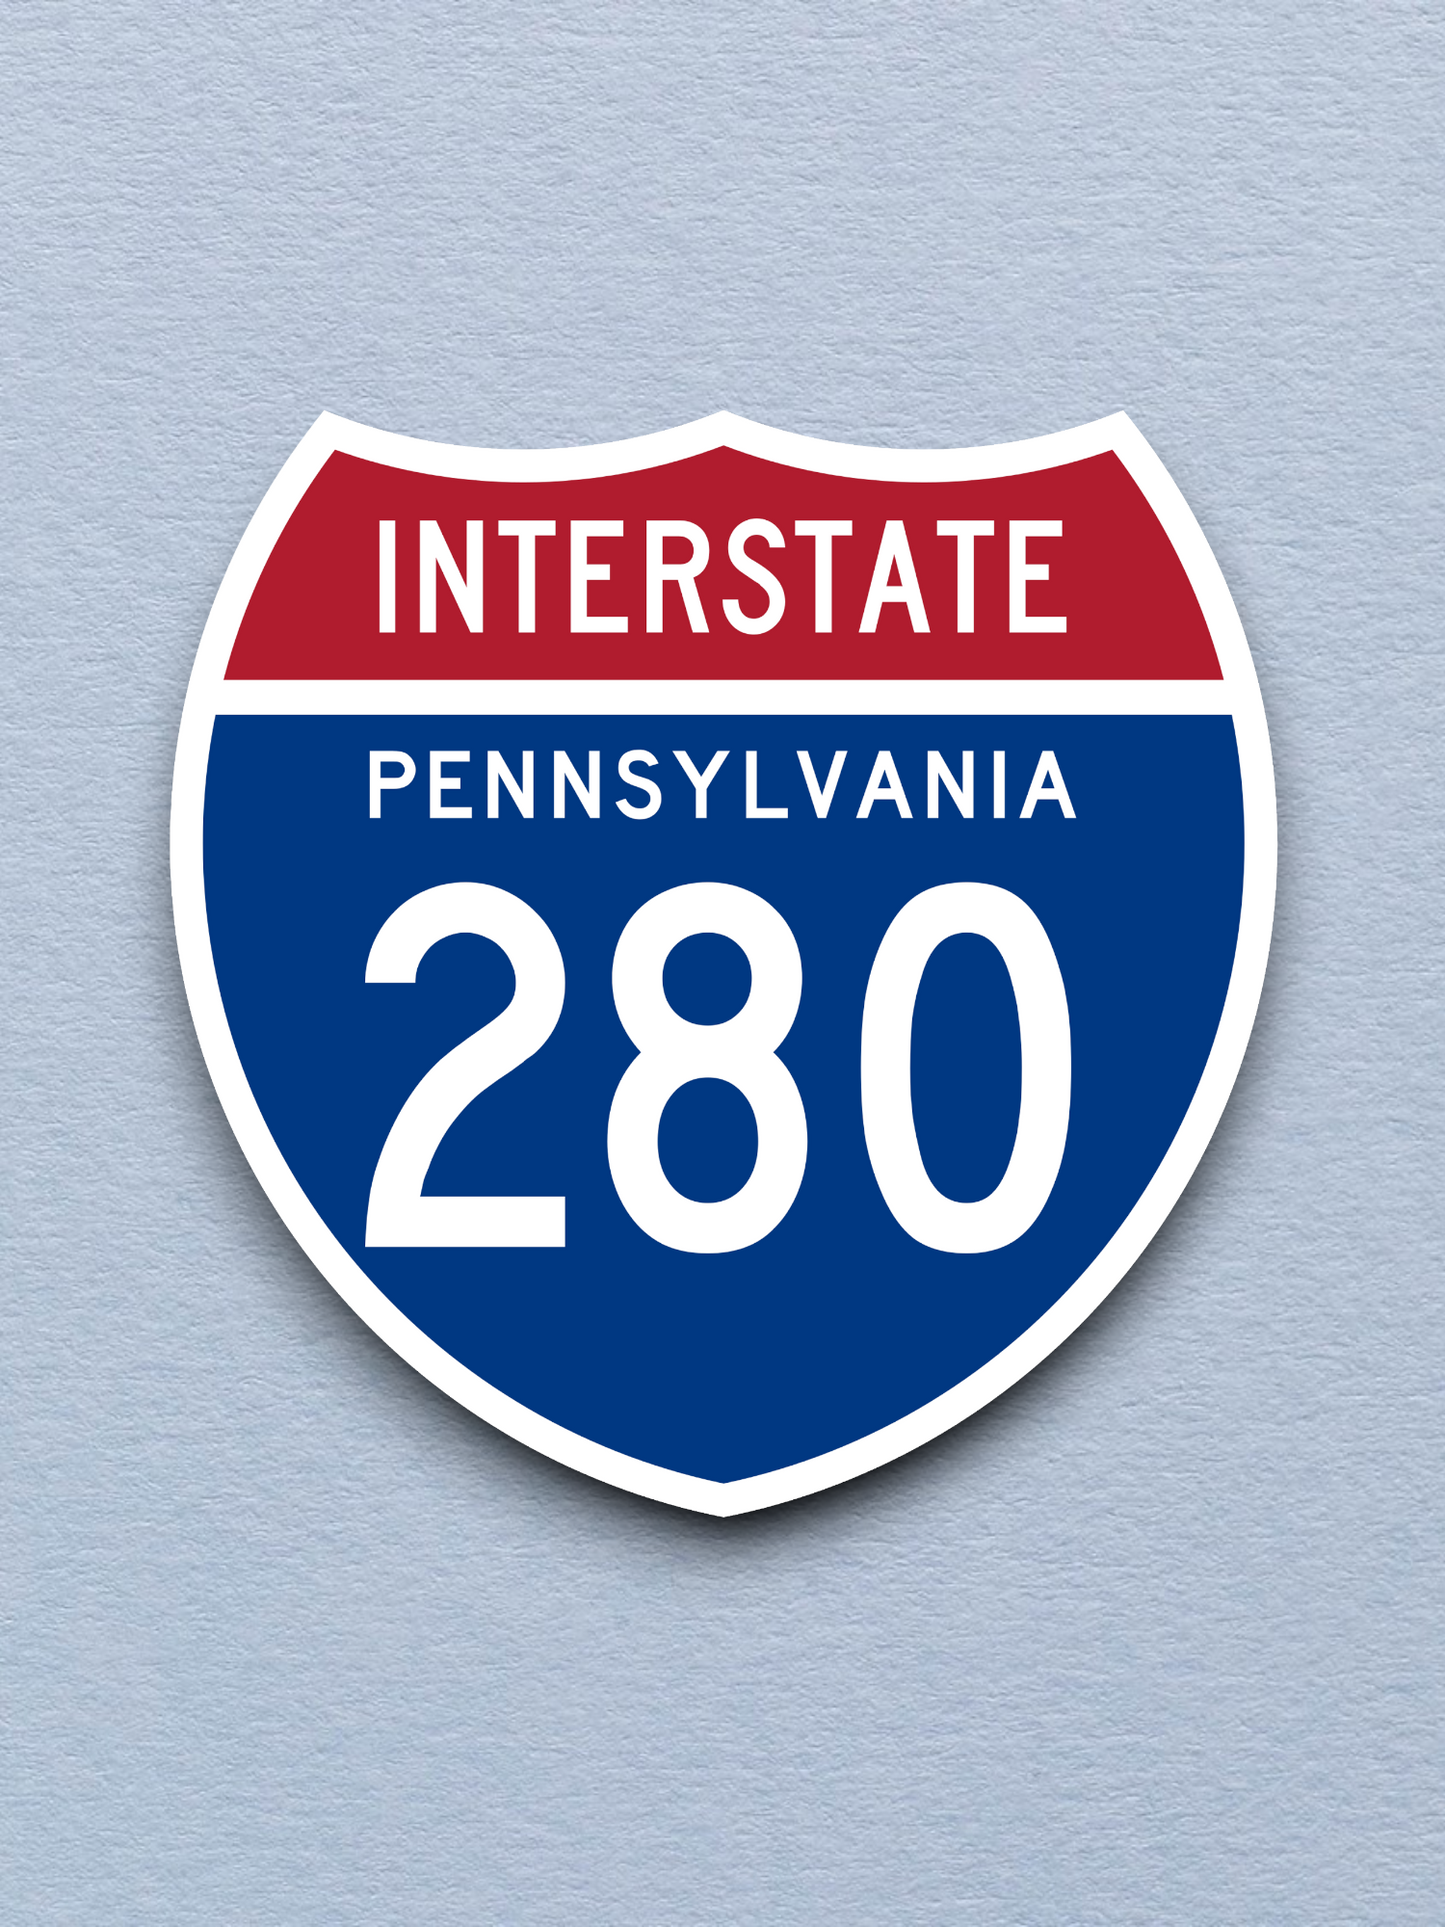 Interstate I-280 Pennsylvania Road Sign Sticker